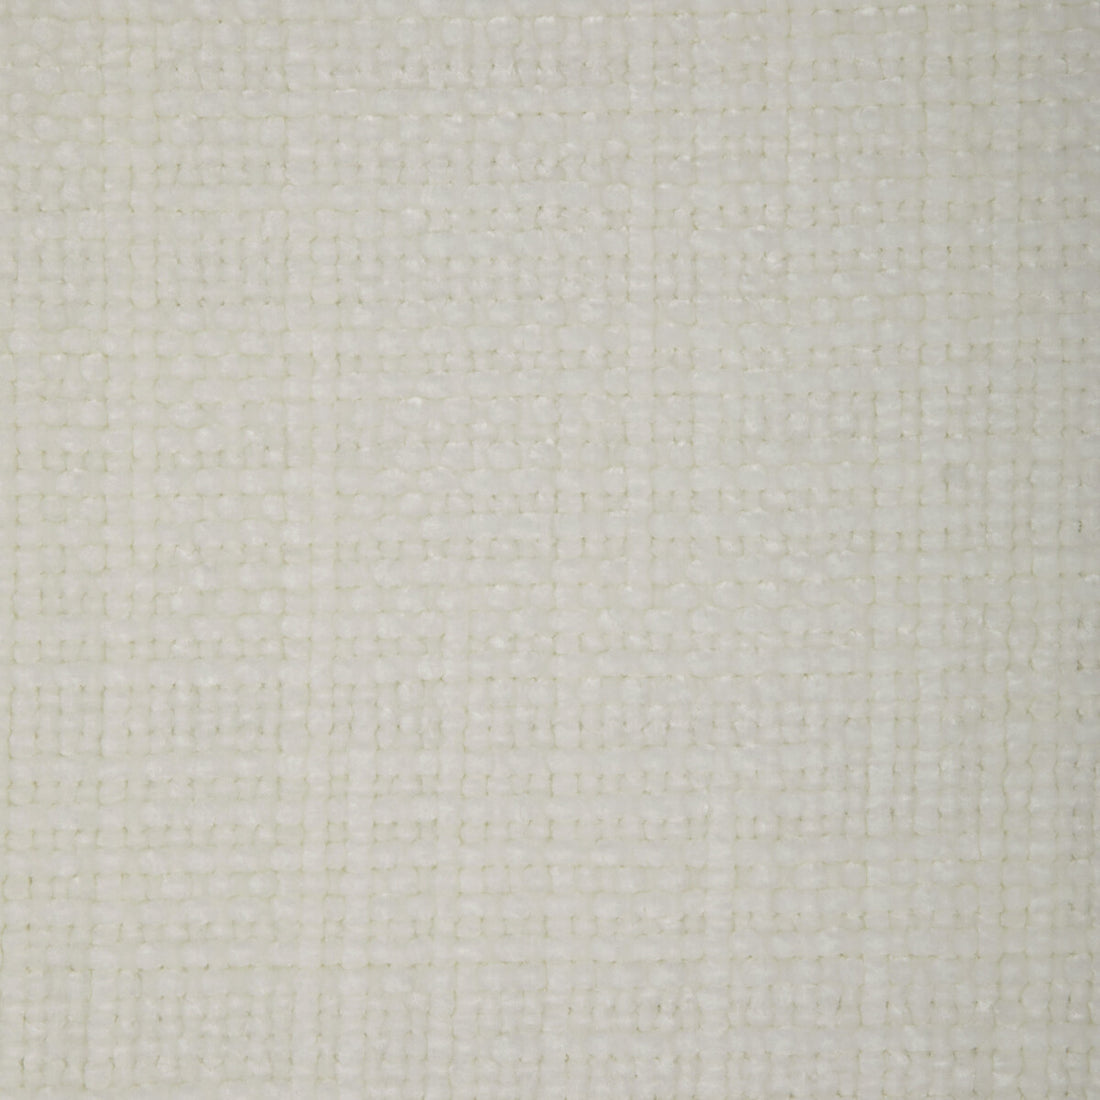 Kravet Smart fabric in 36991-101 color - pattern 36991.101.0 - by Kravet Smart in the Performance Kravetarmor collection